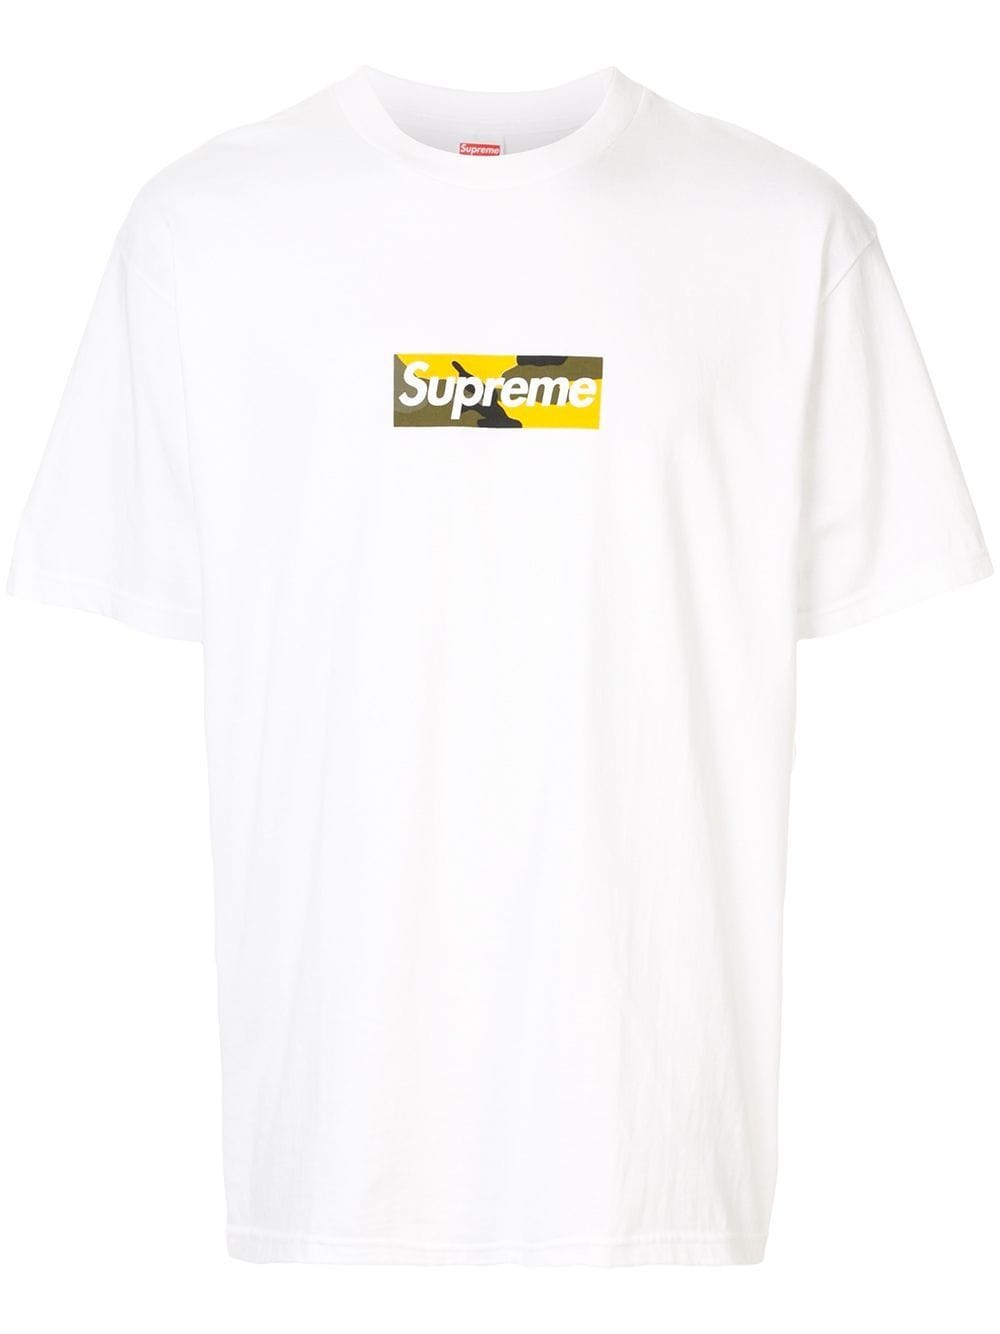 Supreme Box-logo Swim Shorts in Yellow for Men